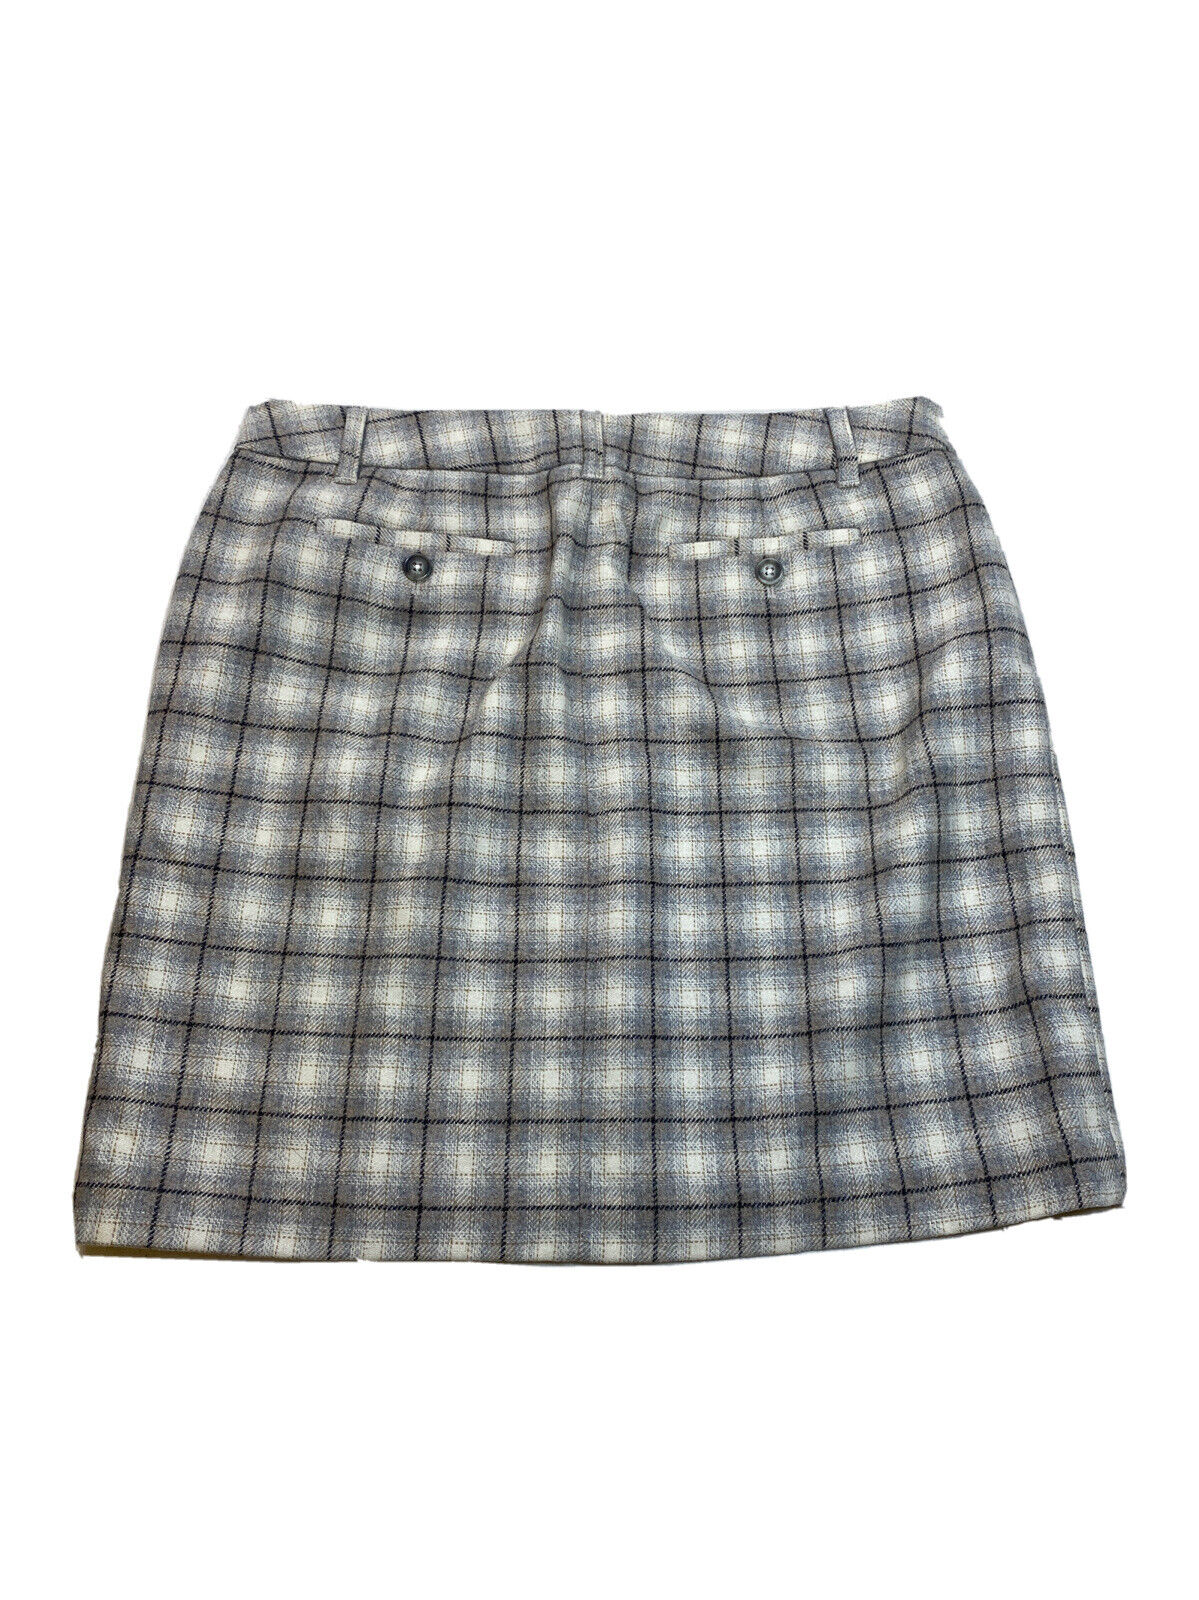 NEW Eddie Bauer Women's Gray Plaid Straight Skirt - 14